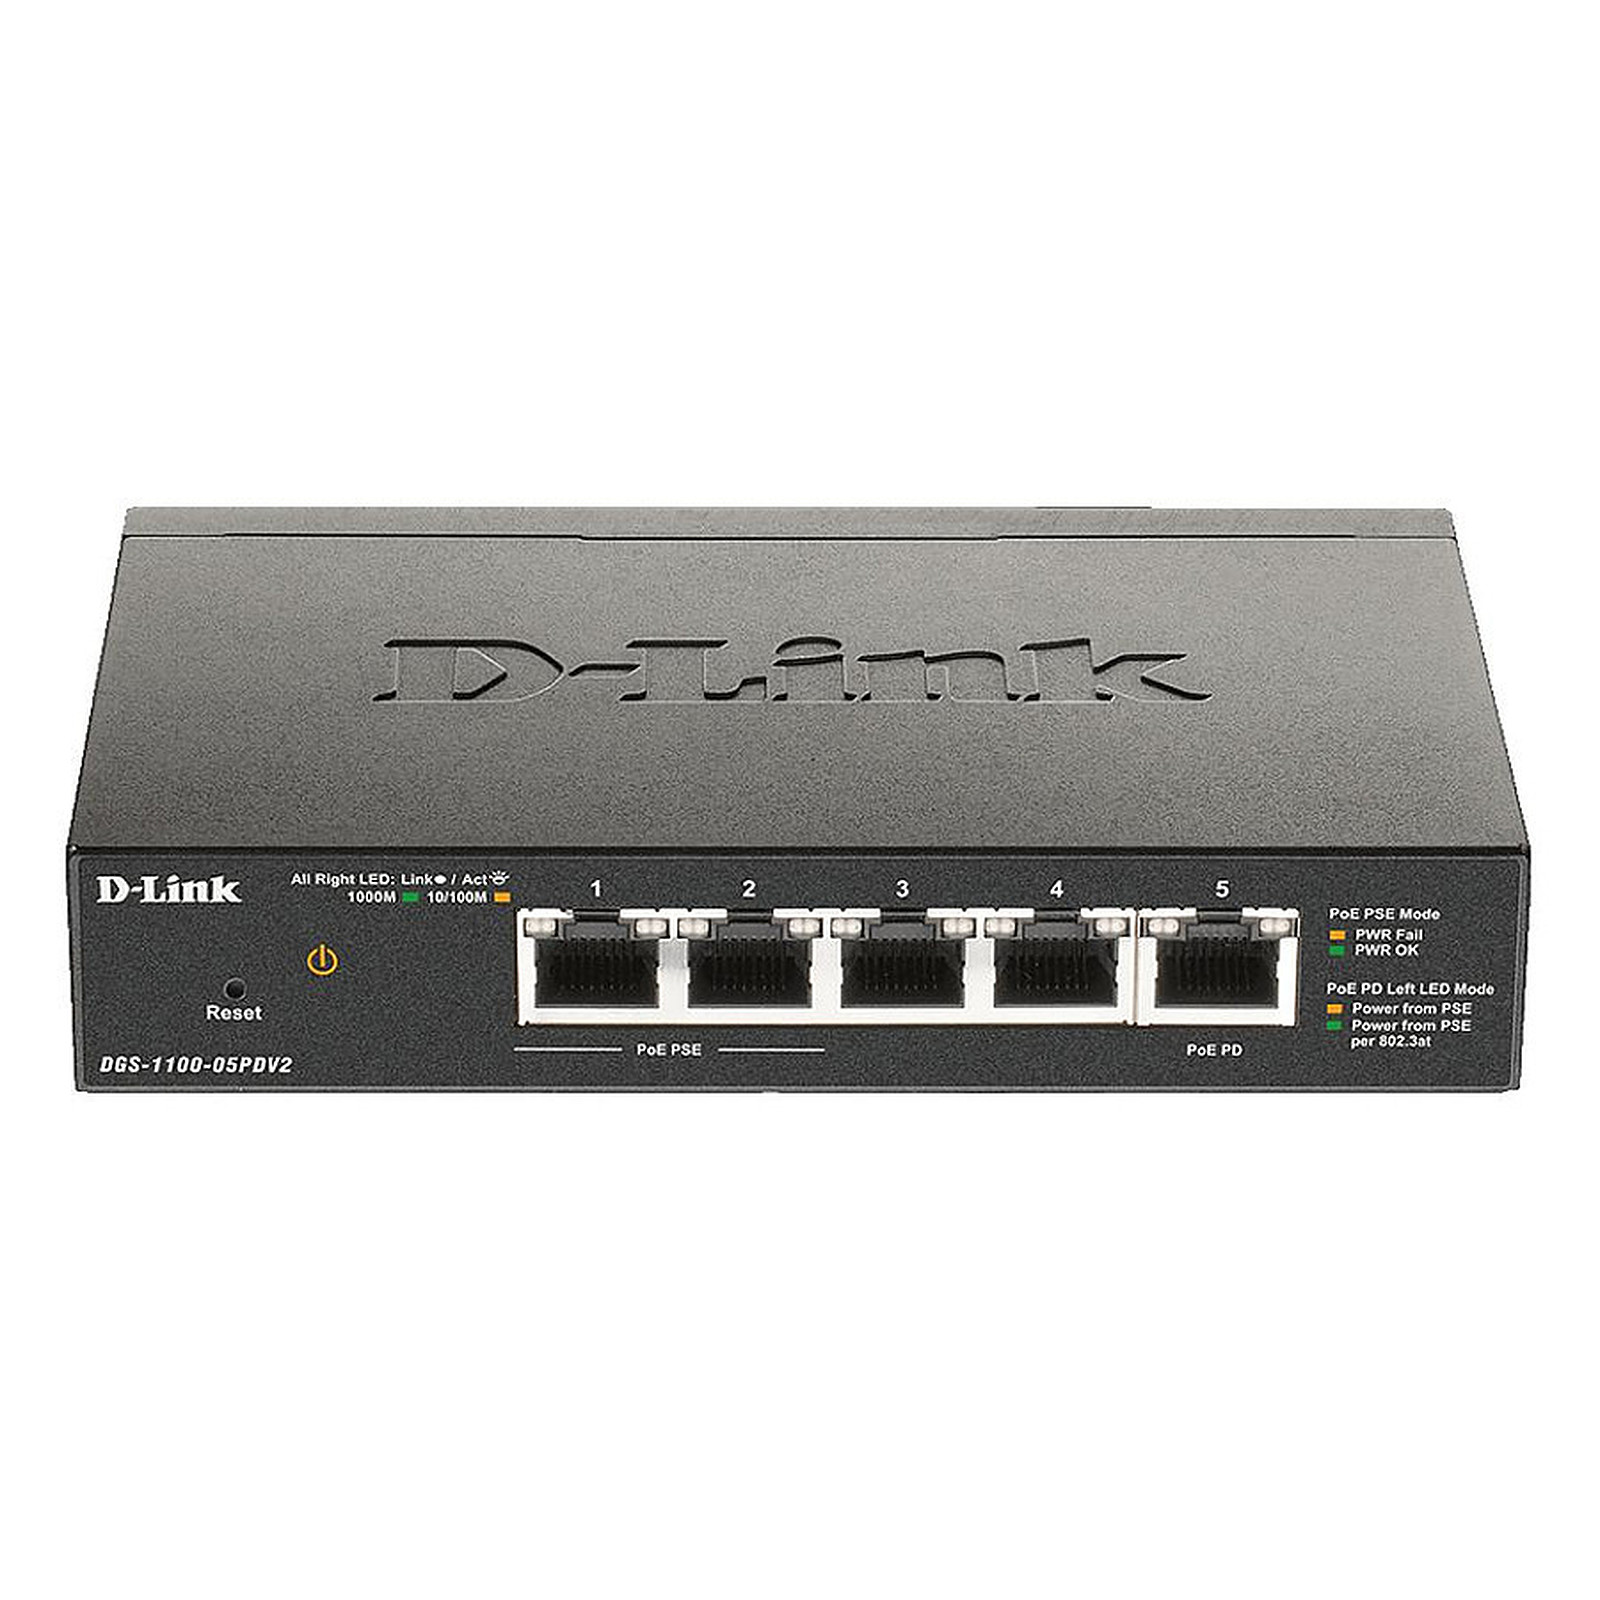 D-Link DGS-1100-05PDV2 - Switch D-Link